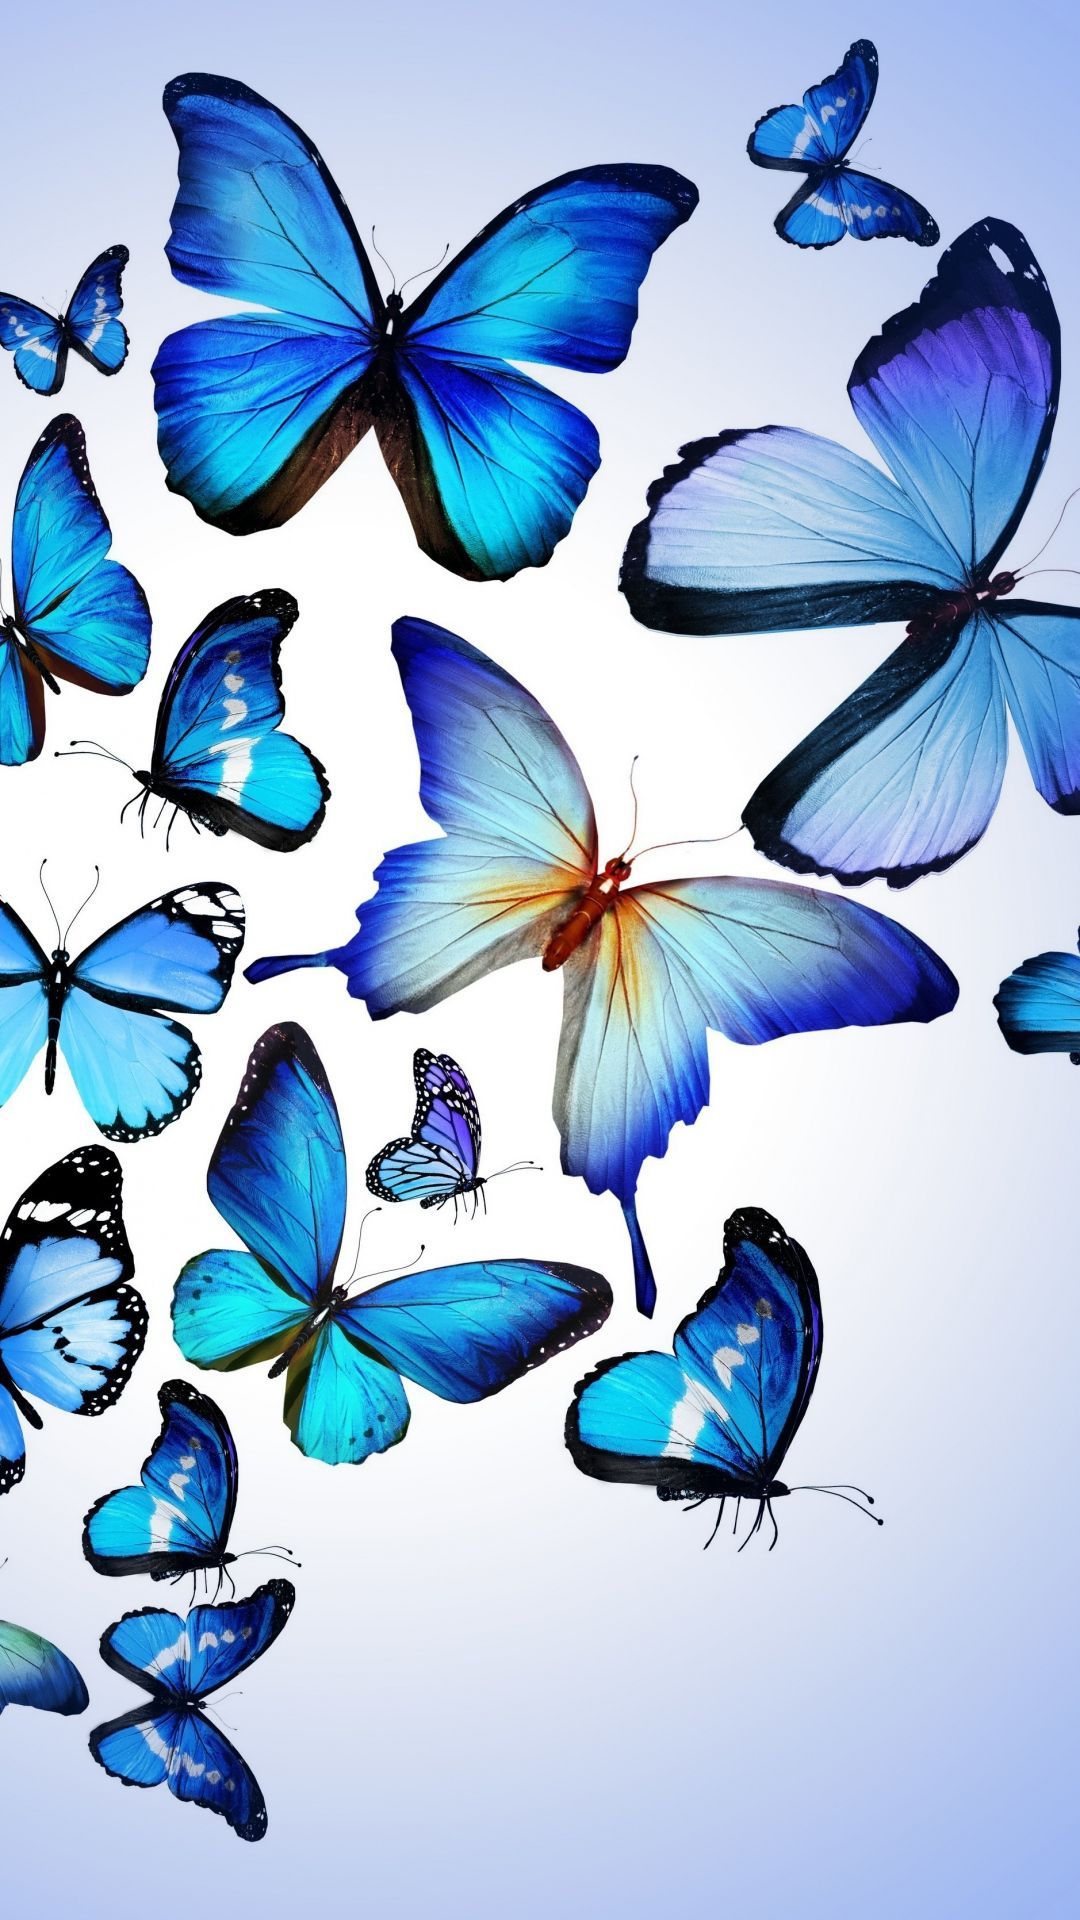 Blue Butterflies Wallpaper iPhone Wallpaper HD. Butterfly wallpaper iphone, Blue butterfly wallpaper, Blue drawings